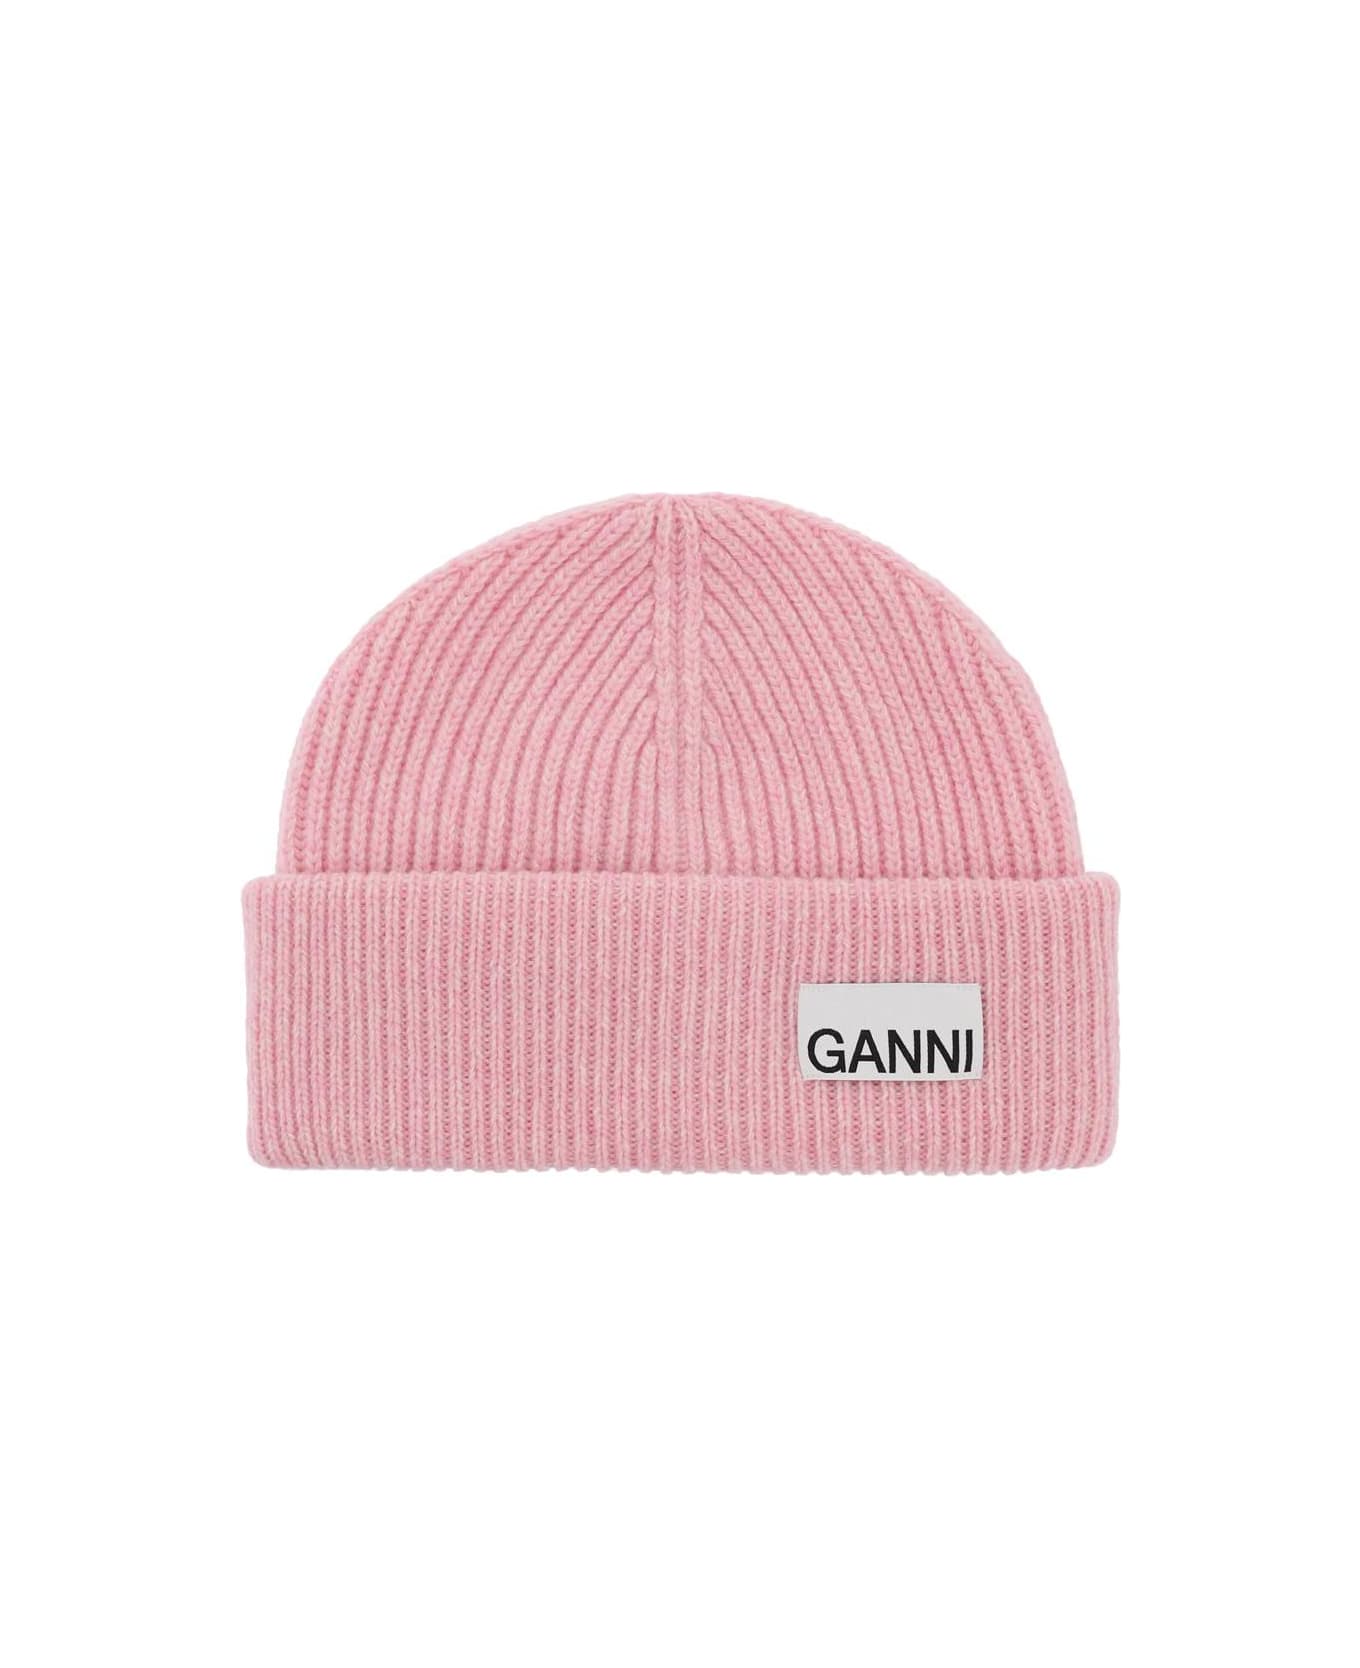 Ganni Pink Wool Blend Cap - MAUVE CHALK (Pink) 帽子